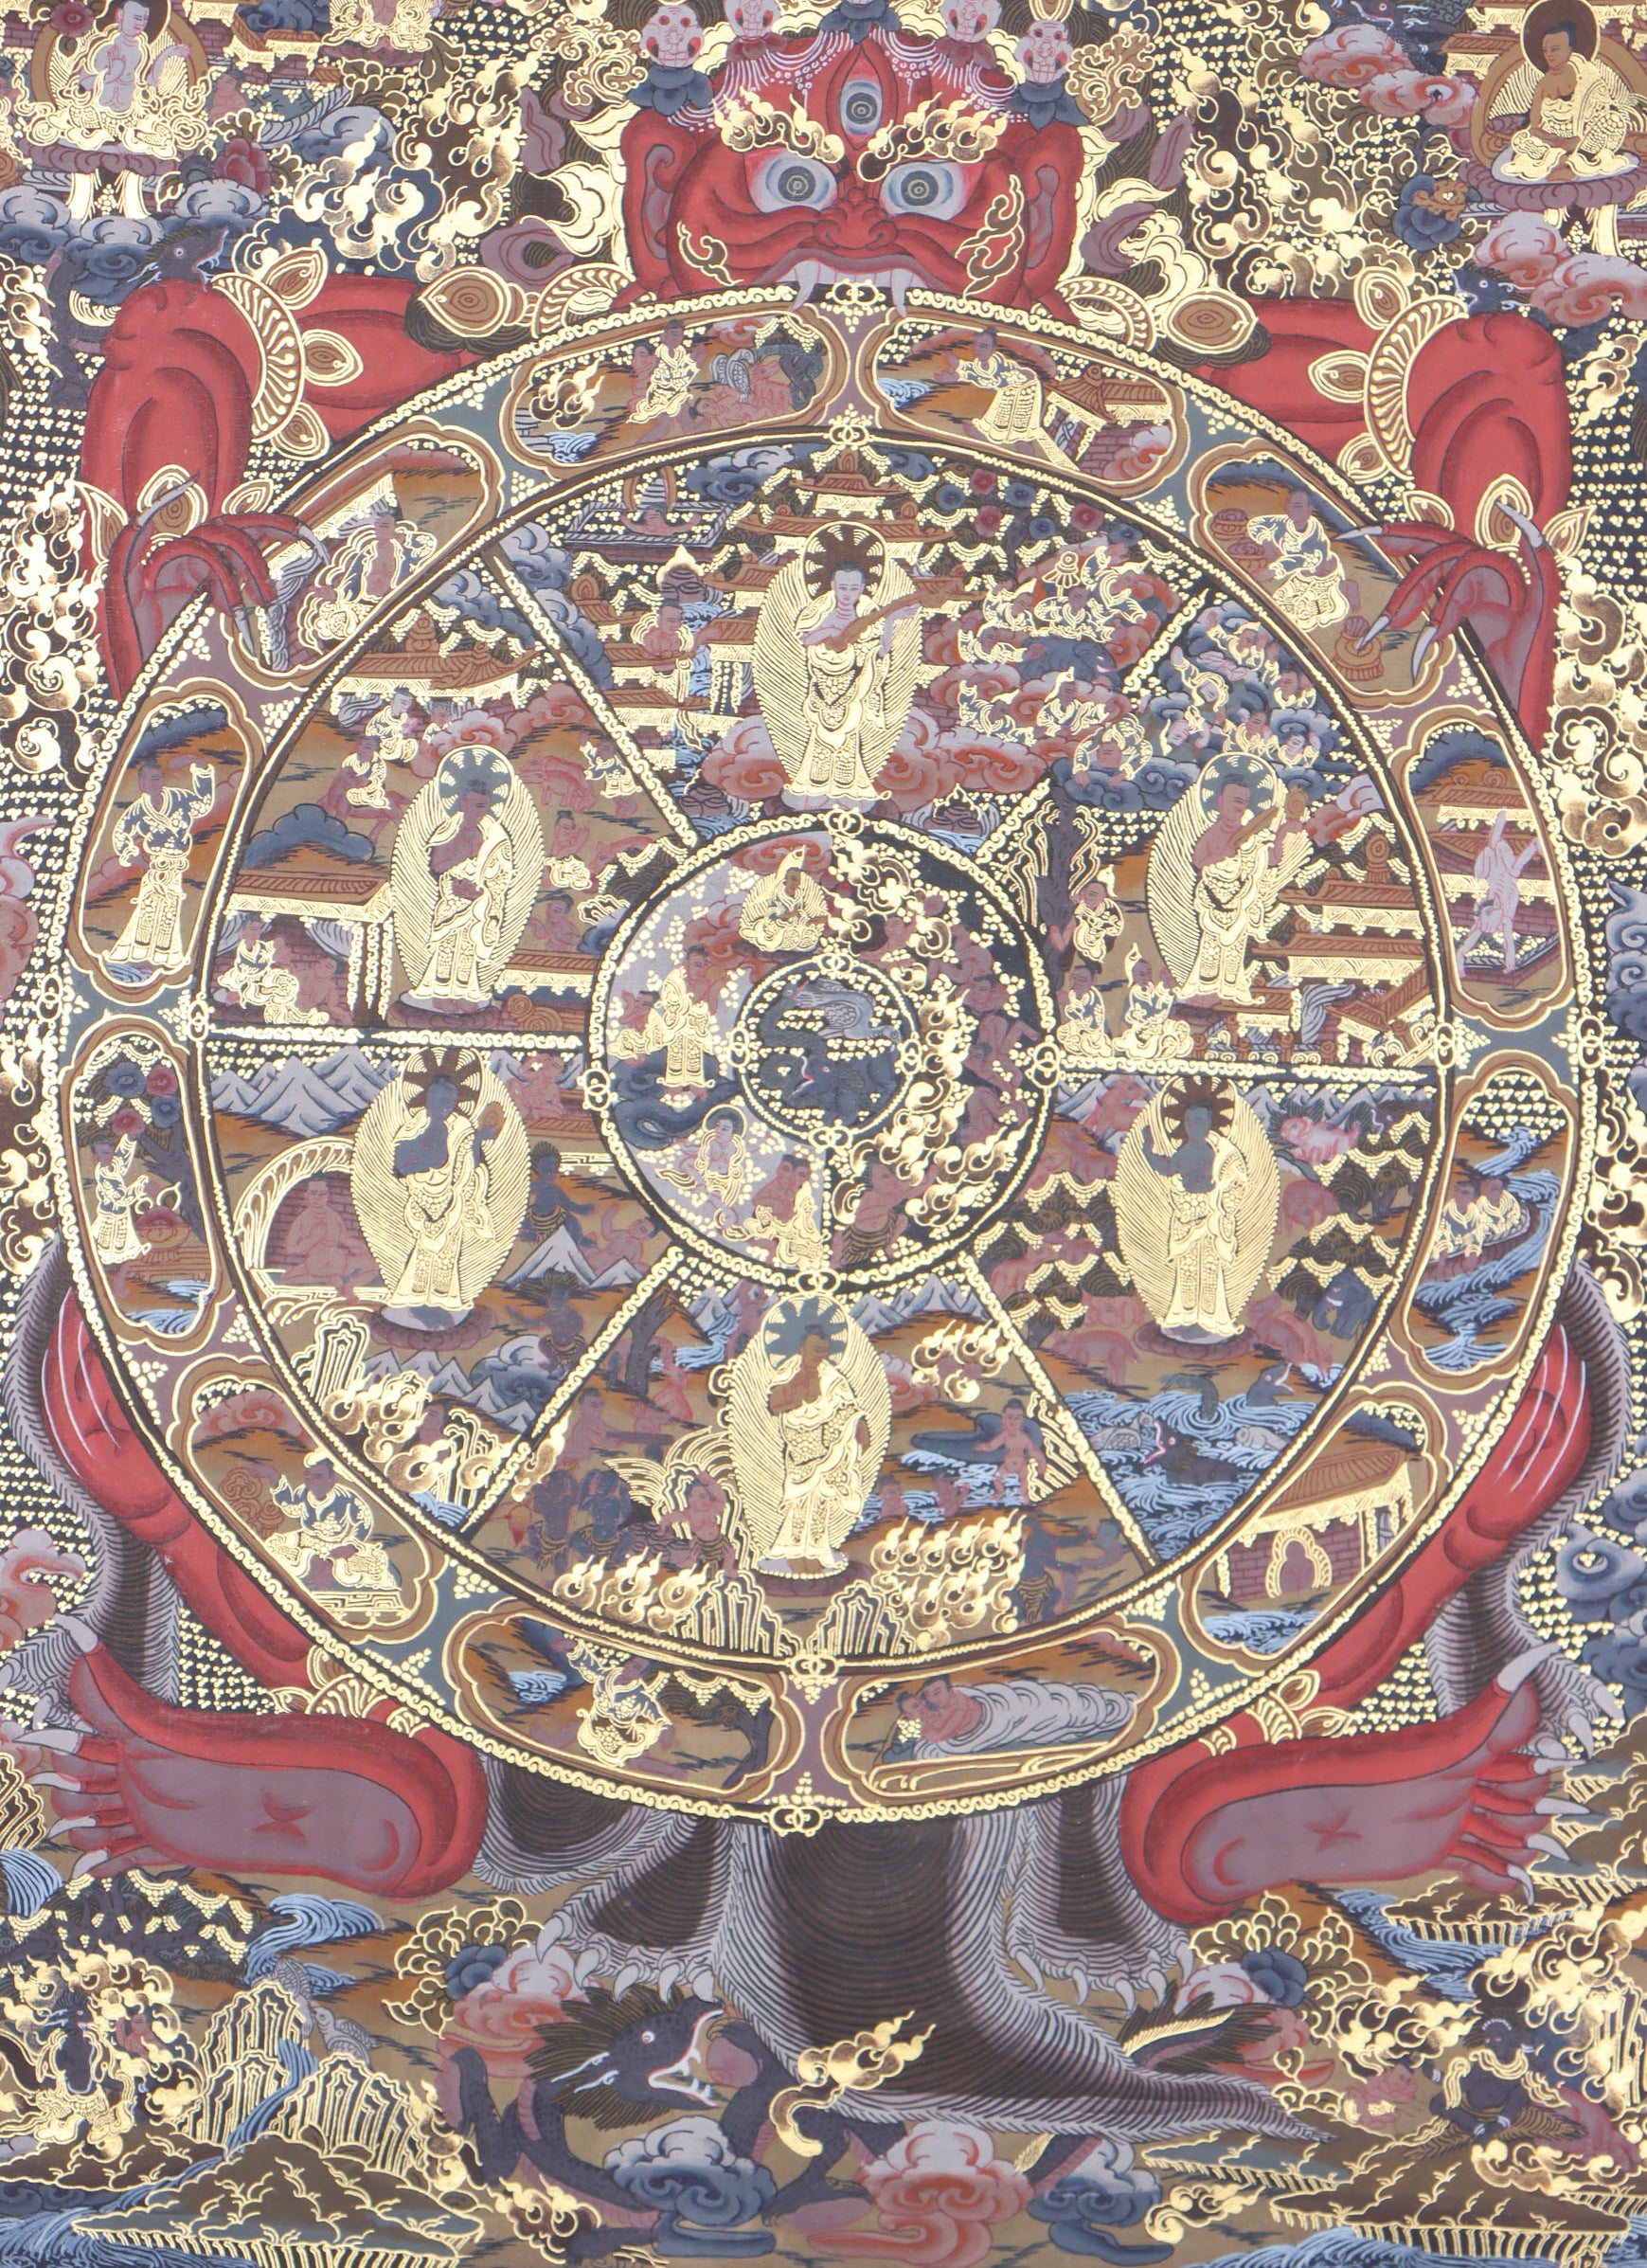 Wheel of Life Thangka, serves as a visual representation of teachings to comprehend life cycle.